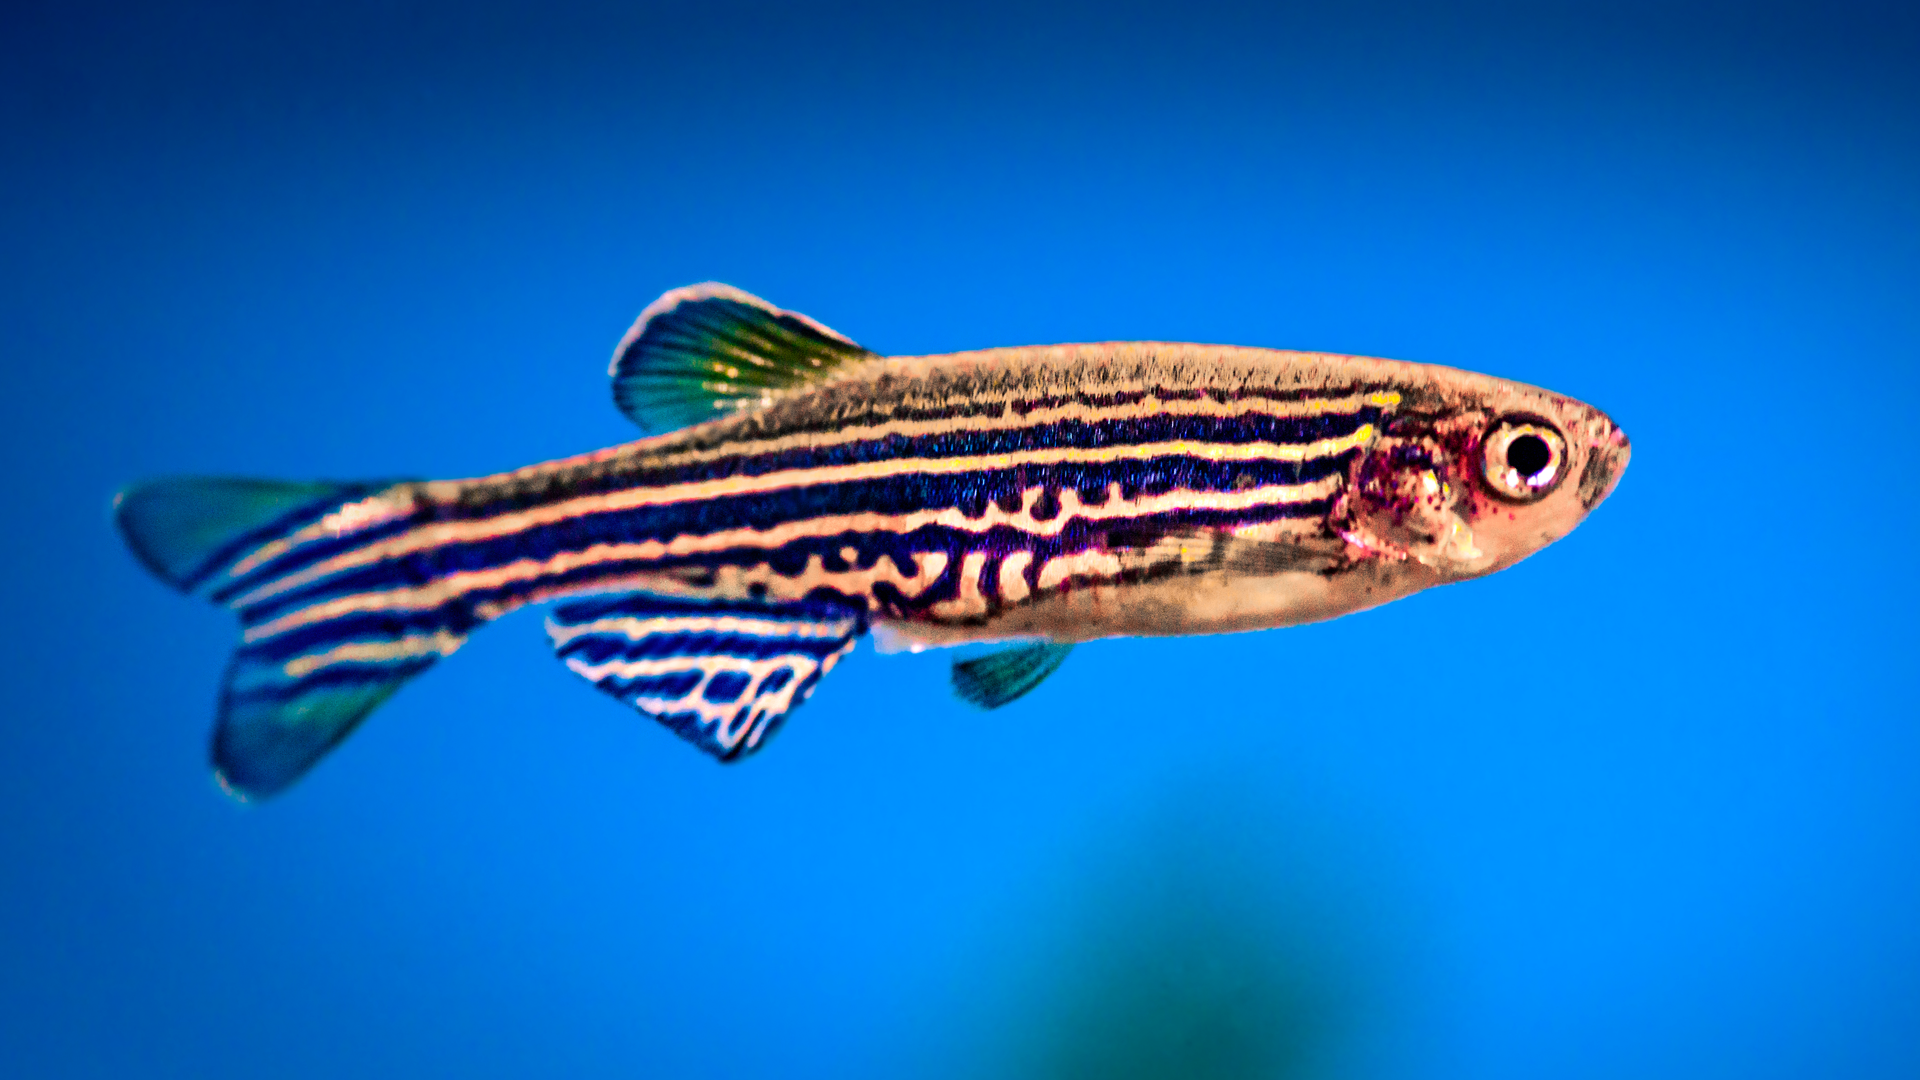 A zebrafish